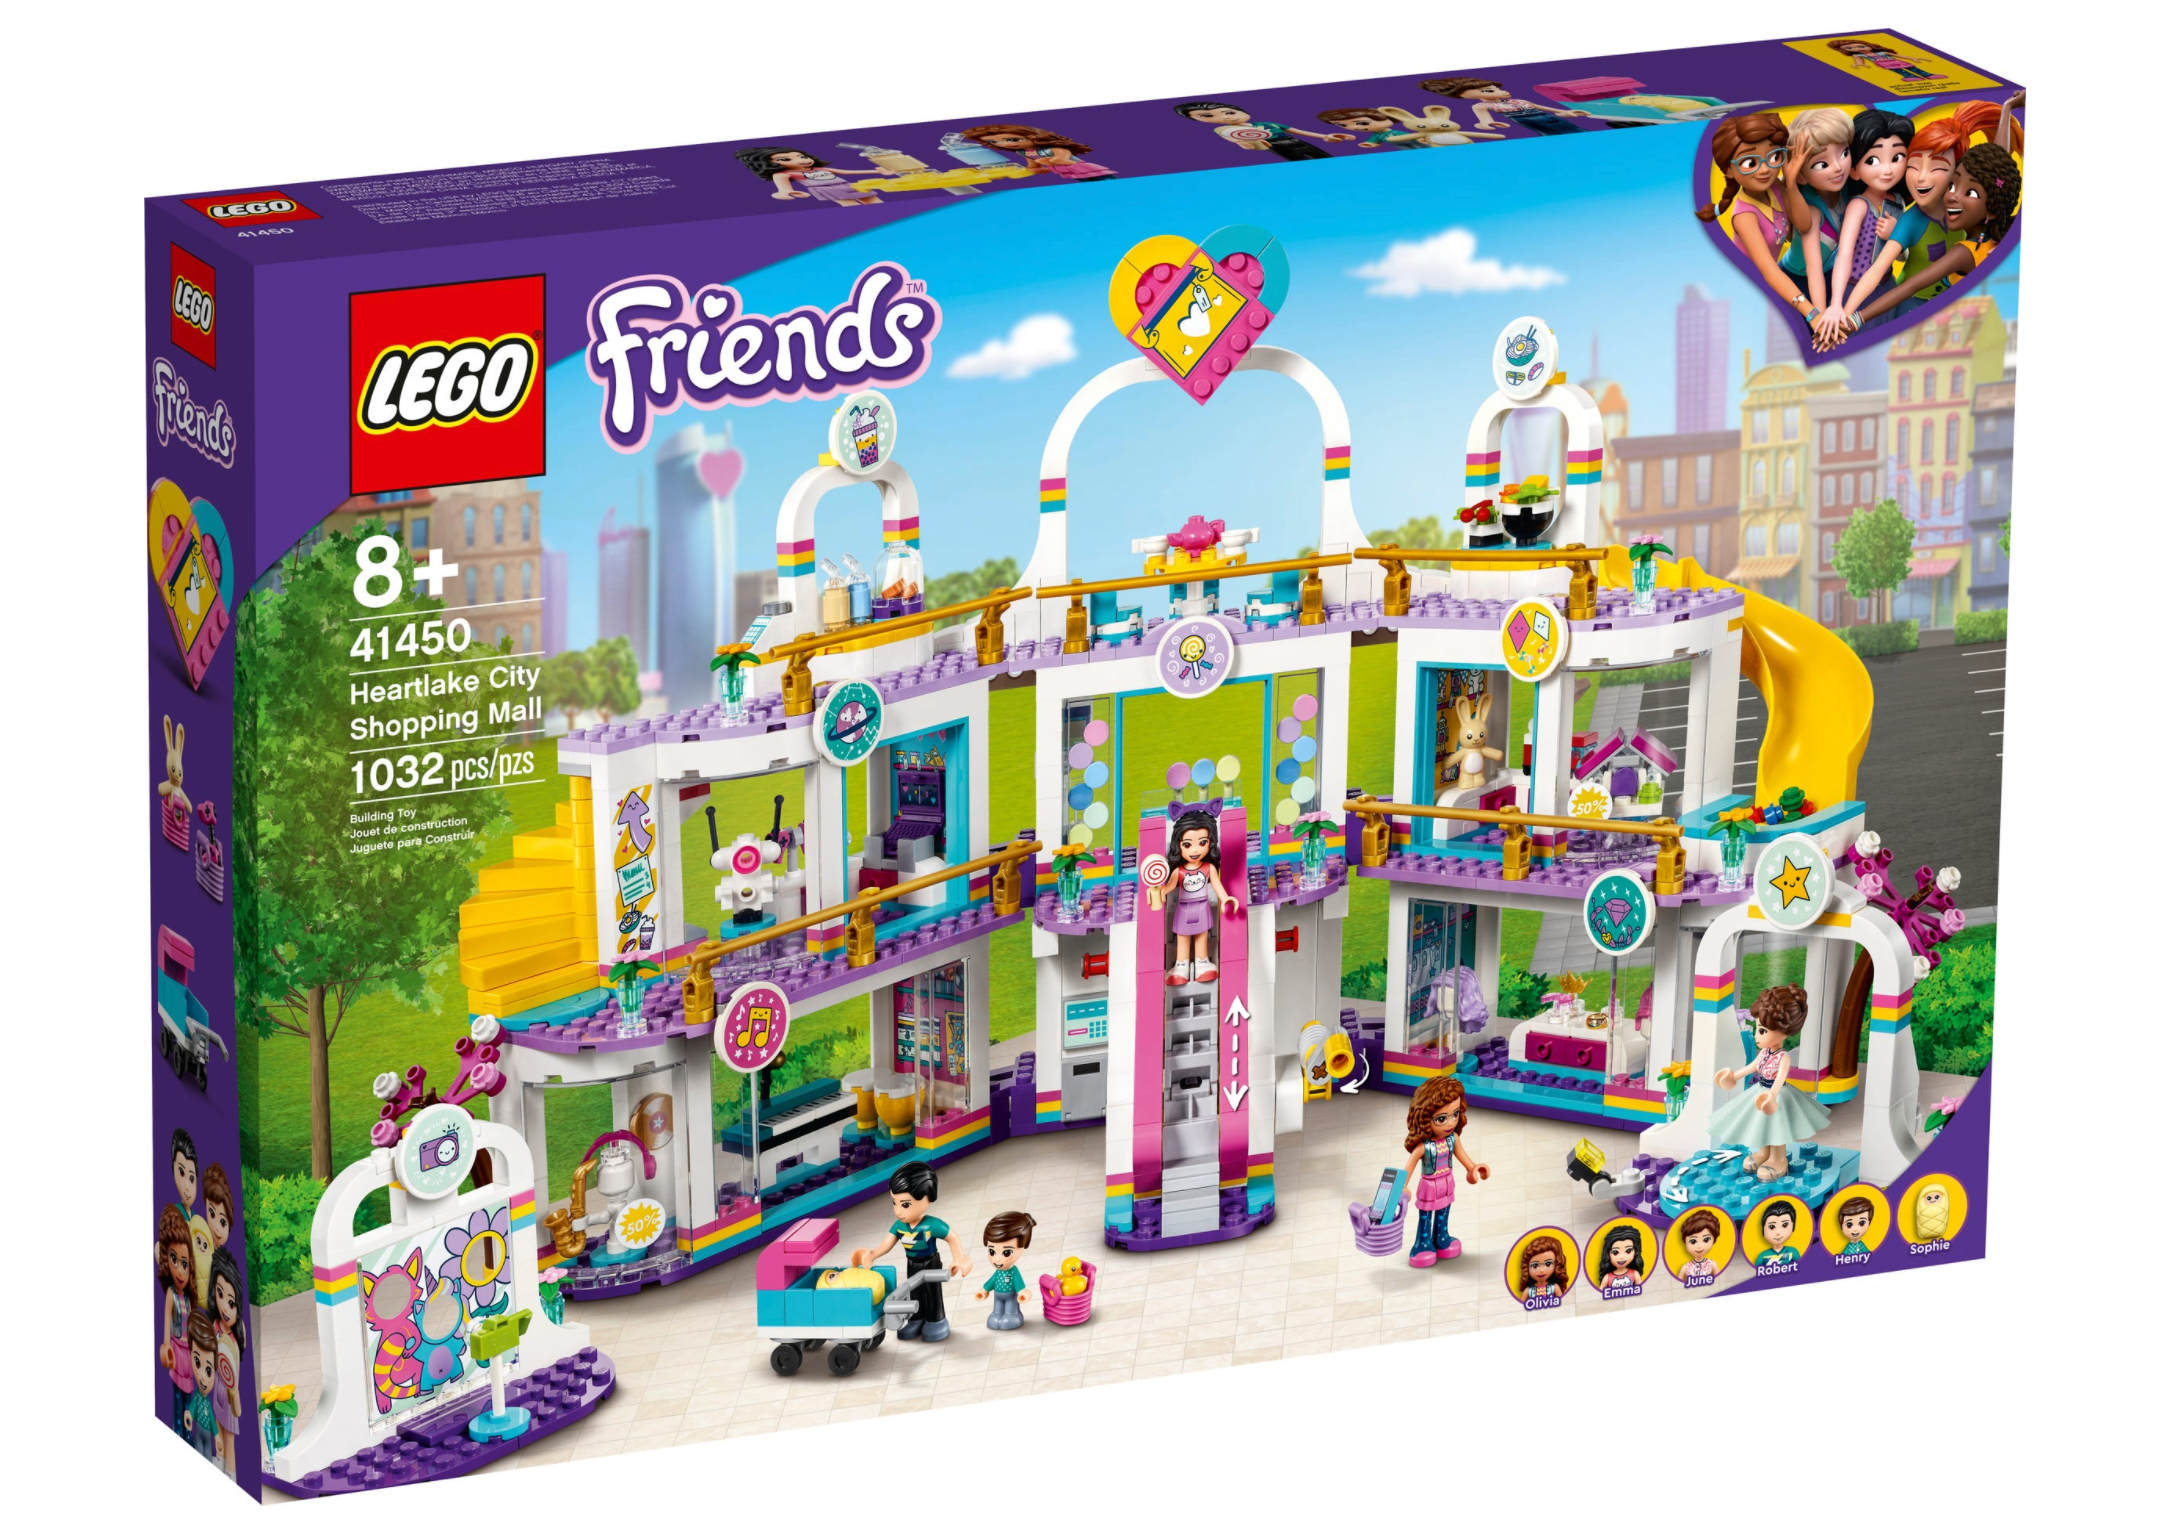 LEGO: Friends - Heartlake City Shopping Mall